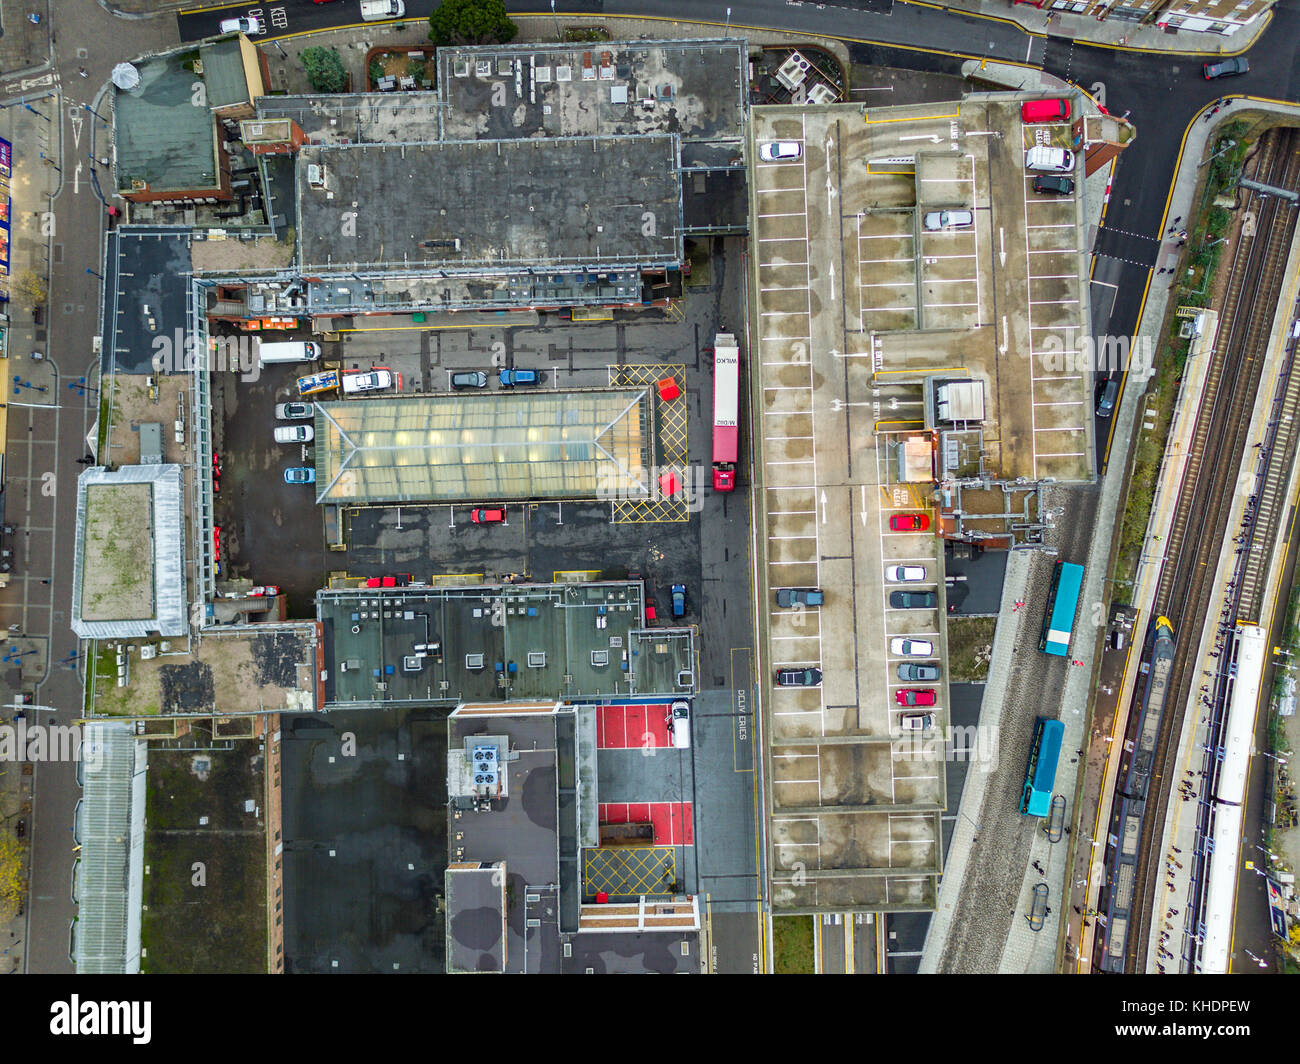 Aerial view of Thamesgate shopping centre, Gravesend, Kent, UK Stock Photo